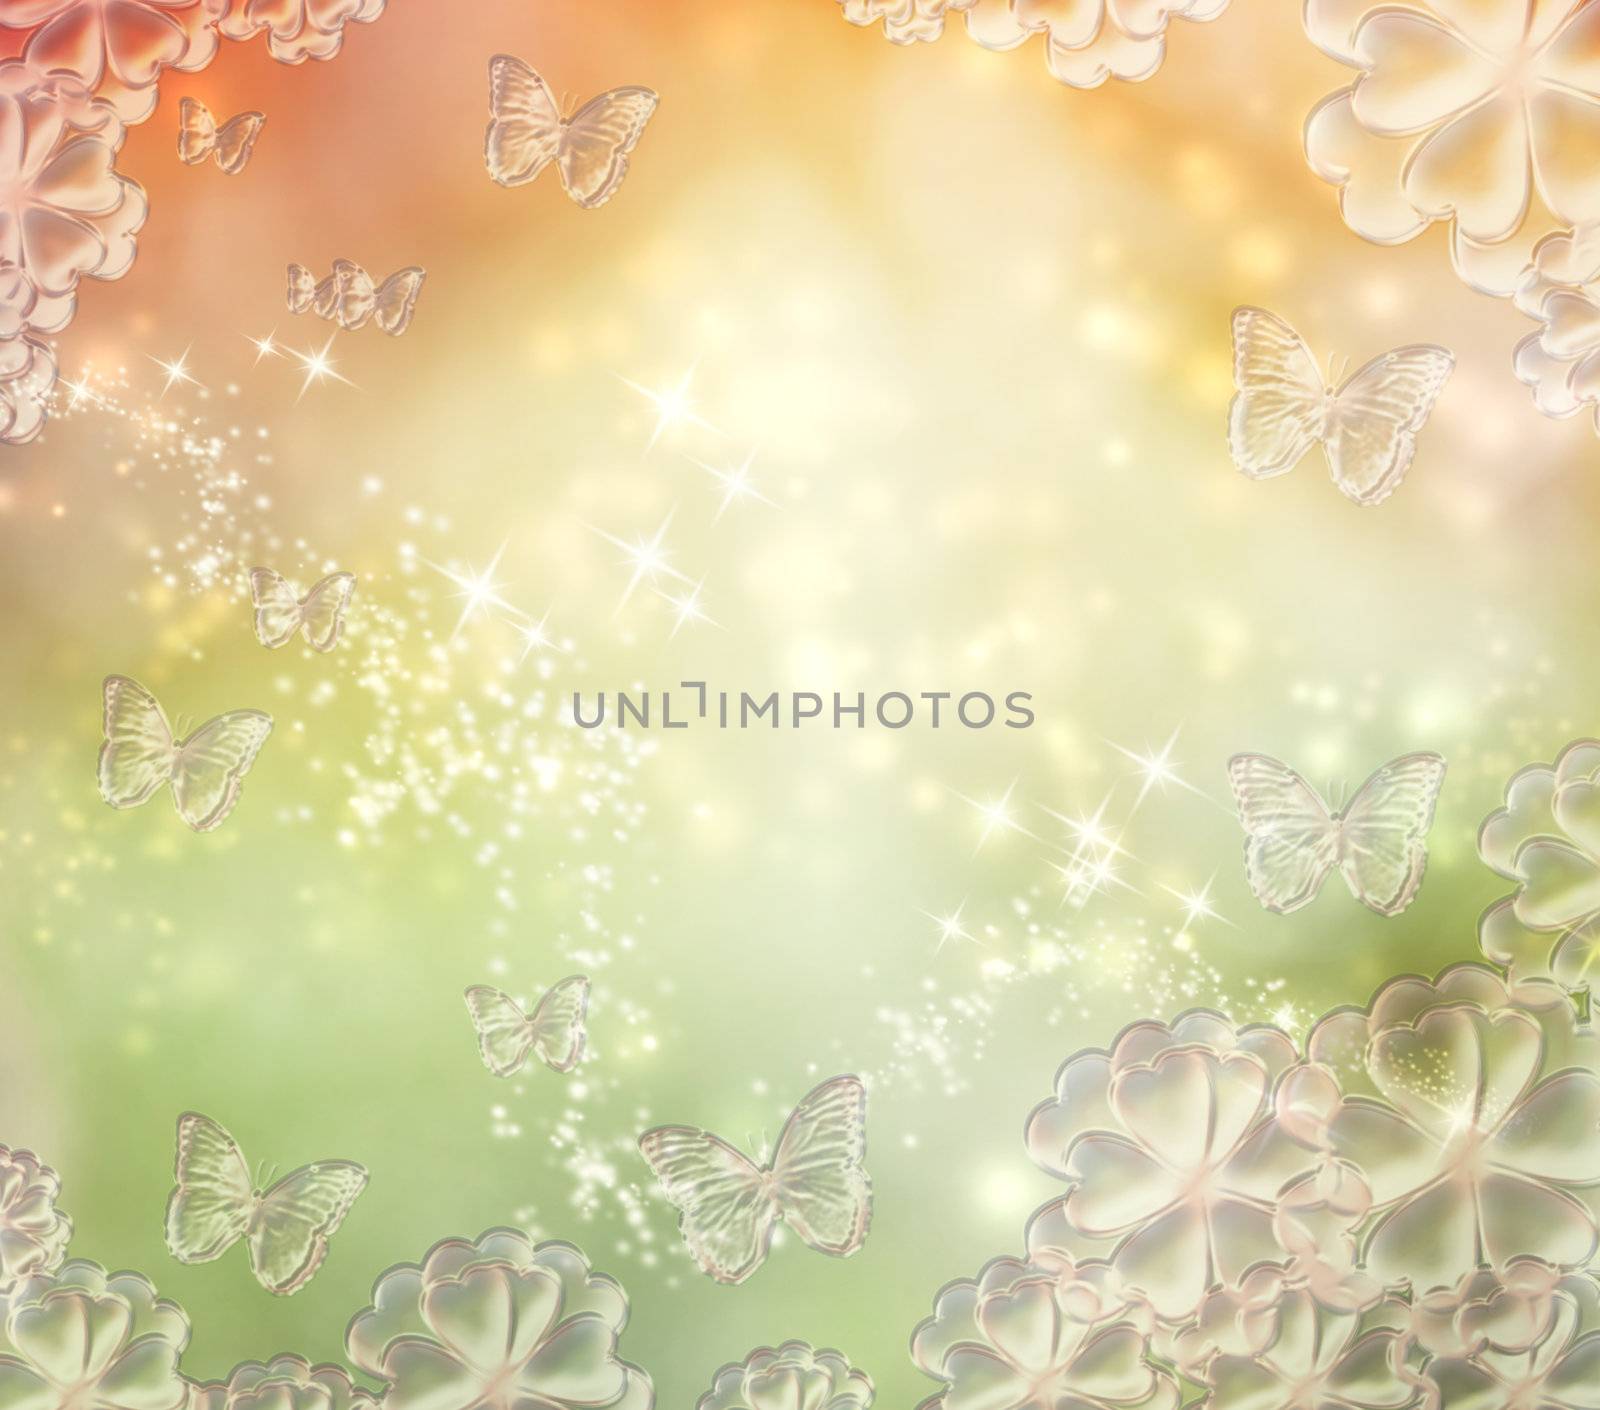 Butterfly Lights Background  by melpomene